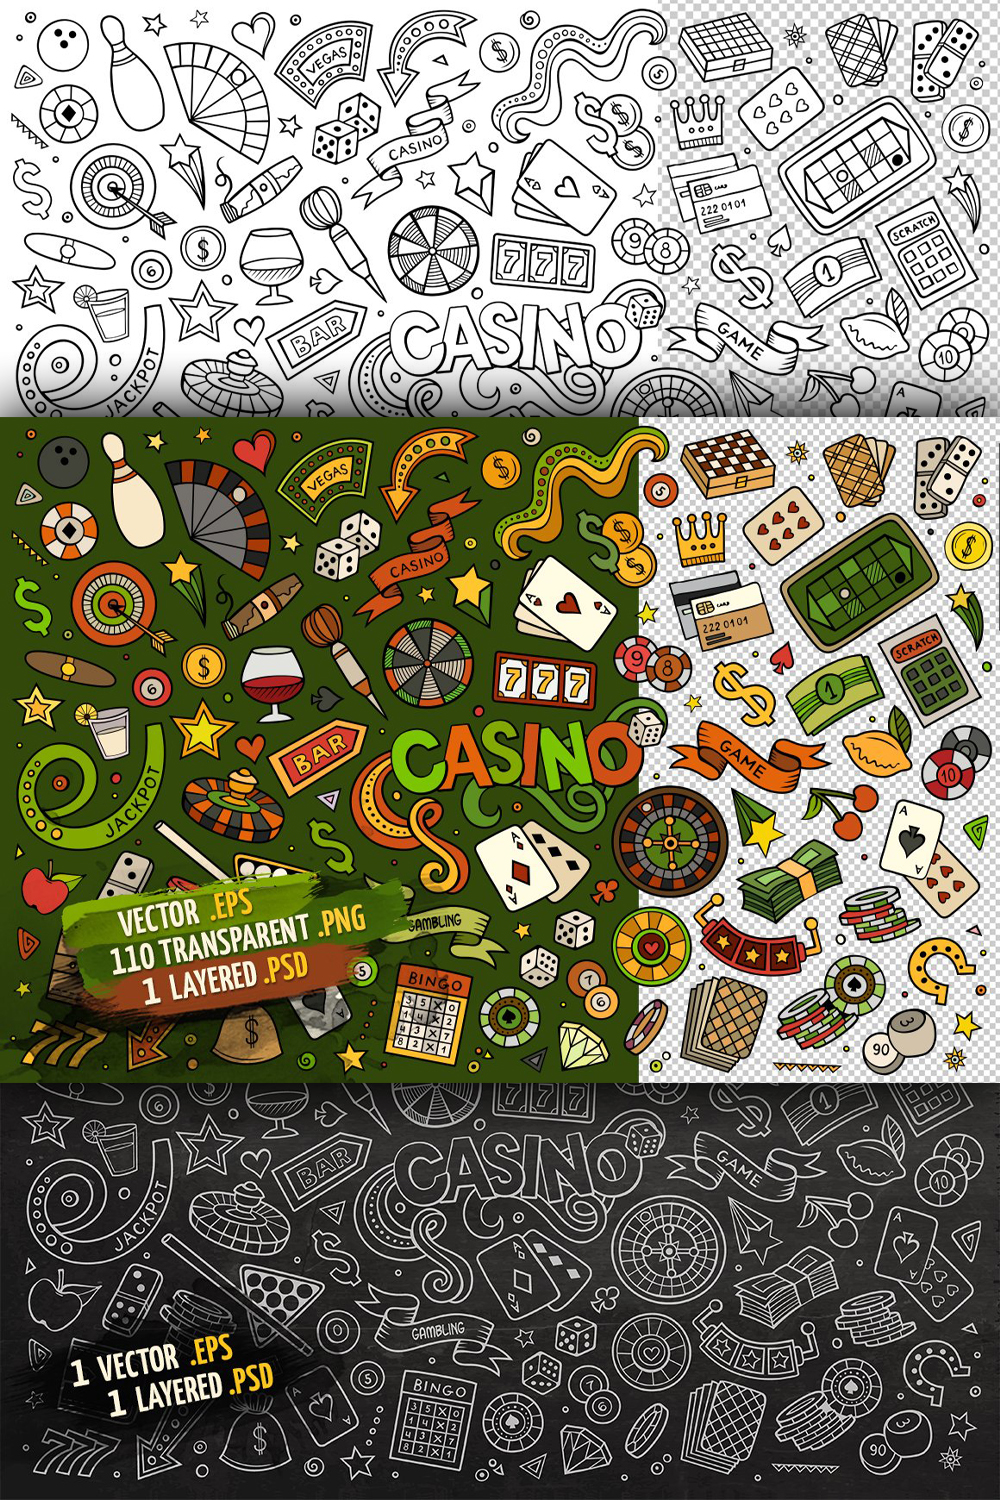 Casino objects symbols pinterest.